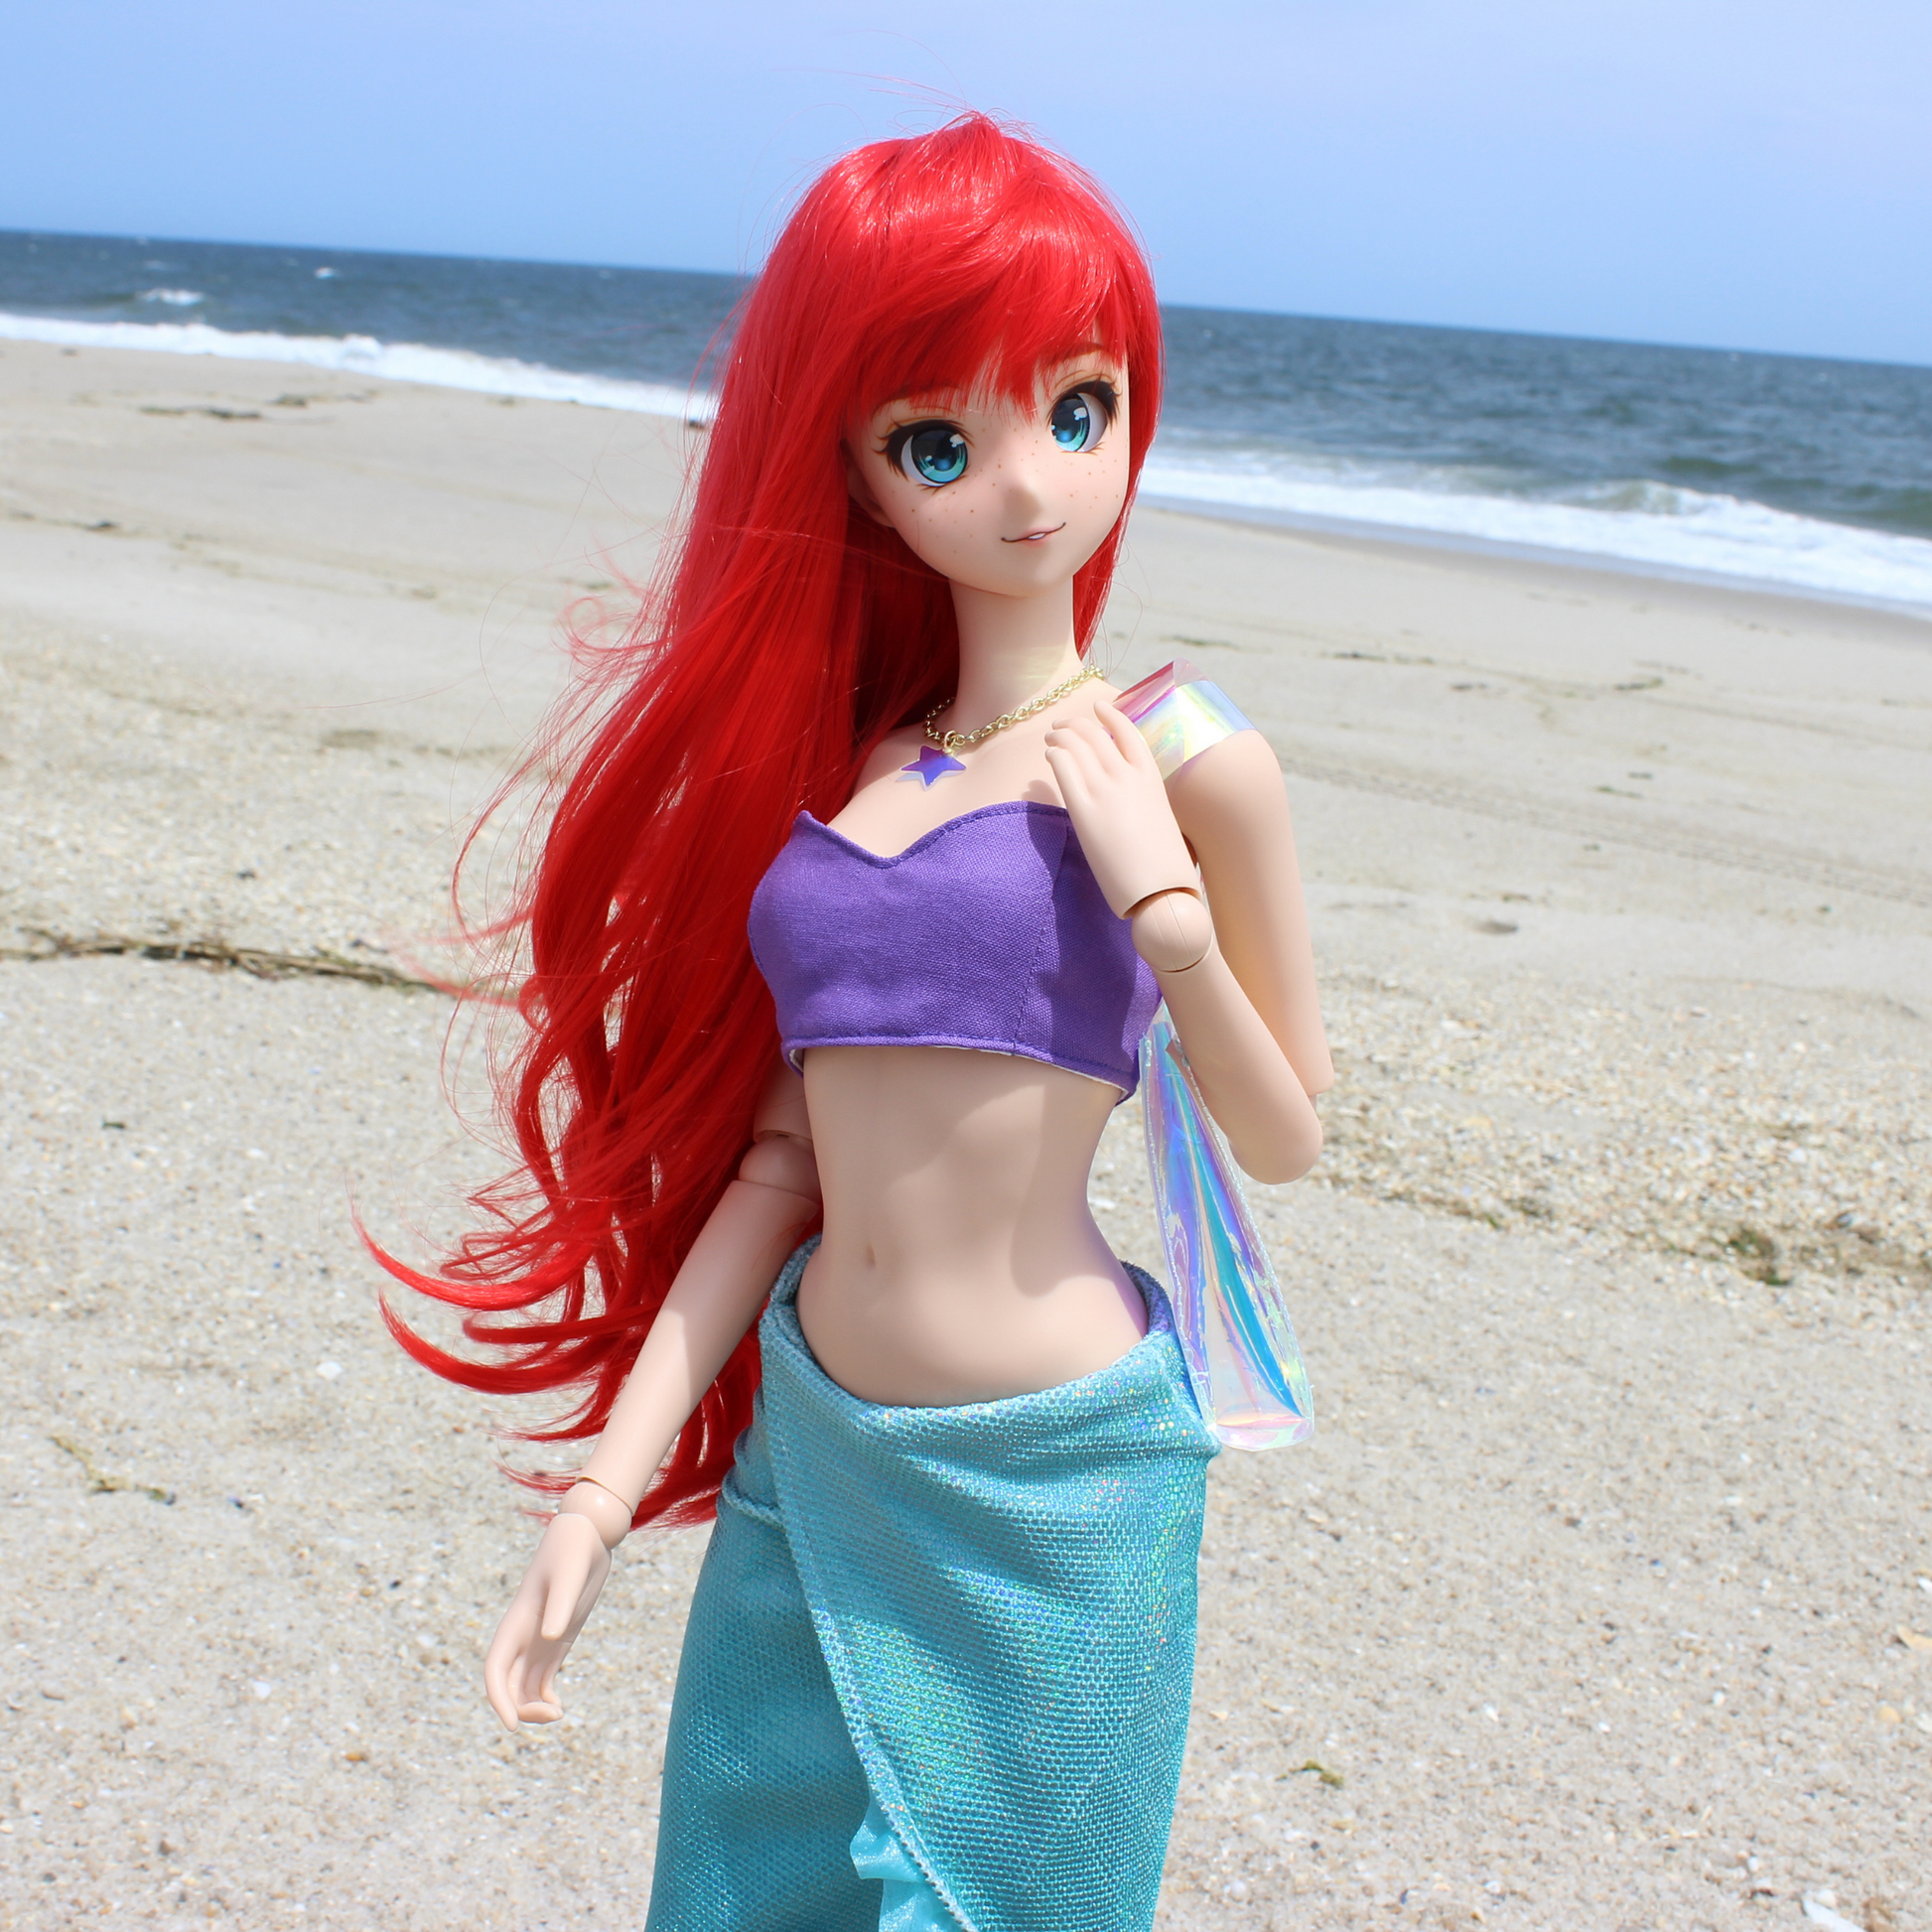 Mermaid Princessbound Iridescent Starfish Necklace - The Doll Fairy